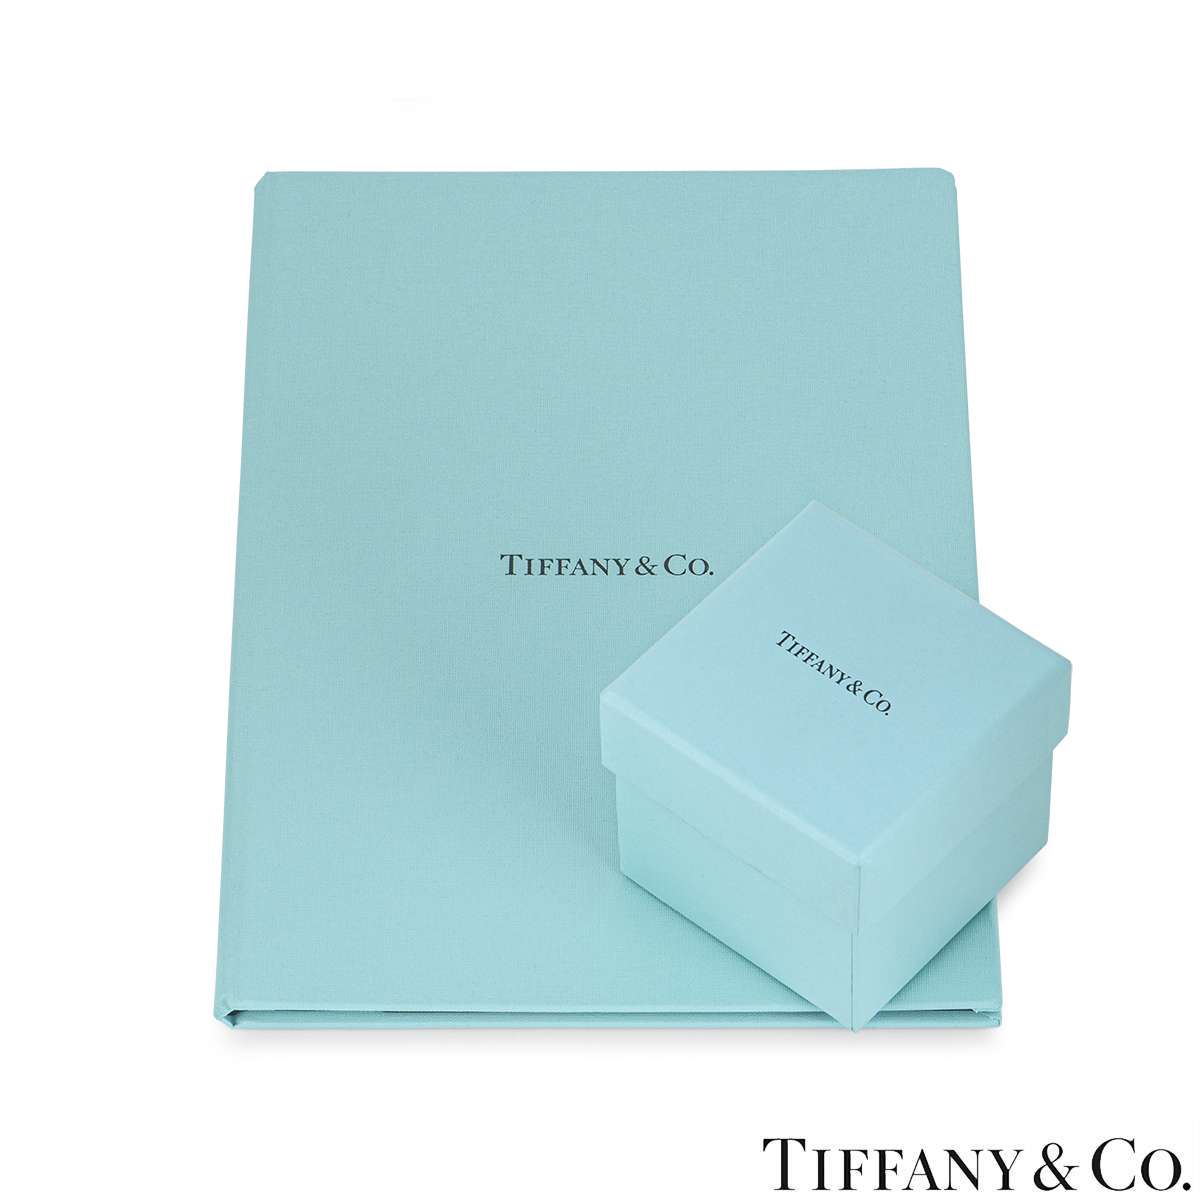 Tiffany & Co. Platinum Round Brilliant Cut Diamond Setting Ring 1.04ct G/VS2